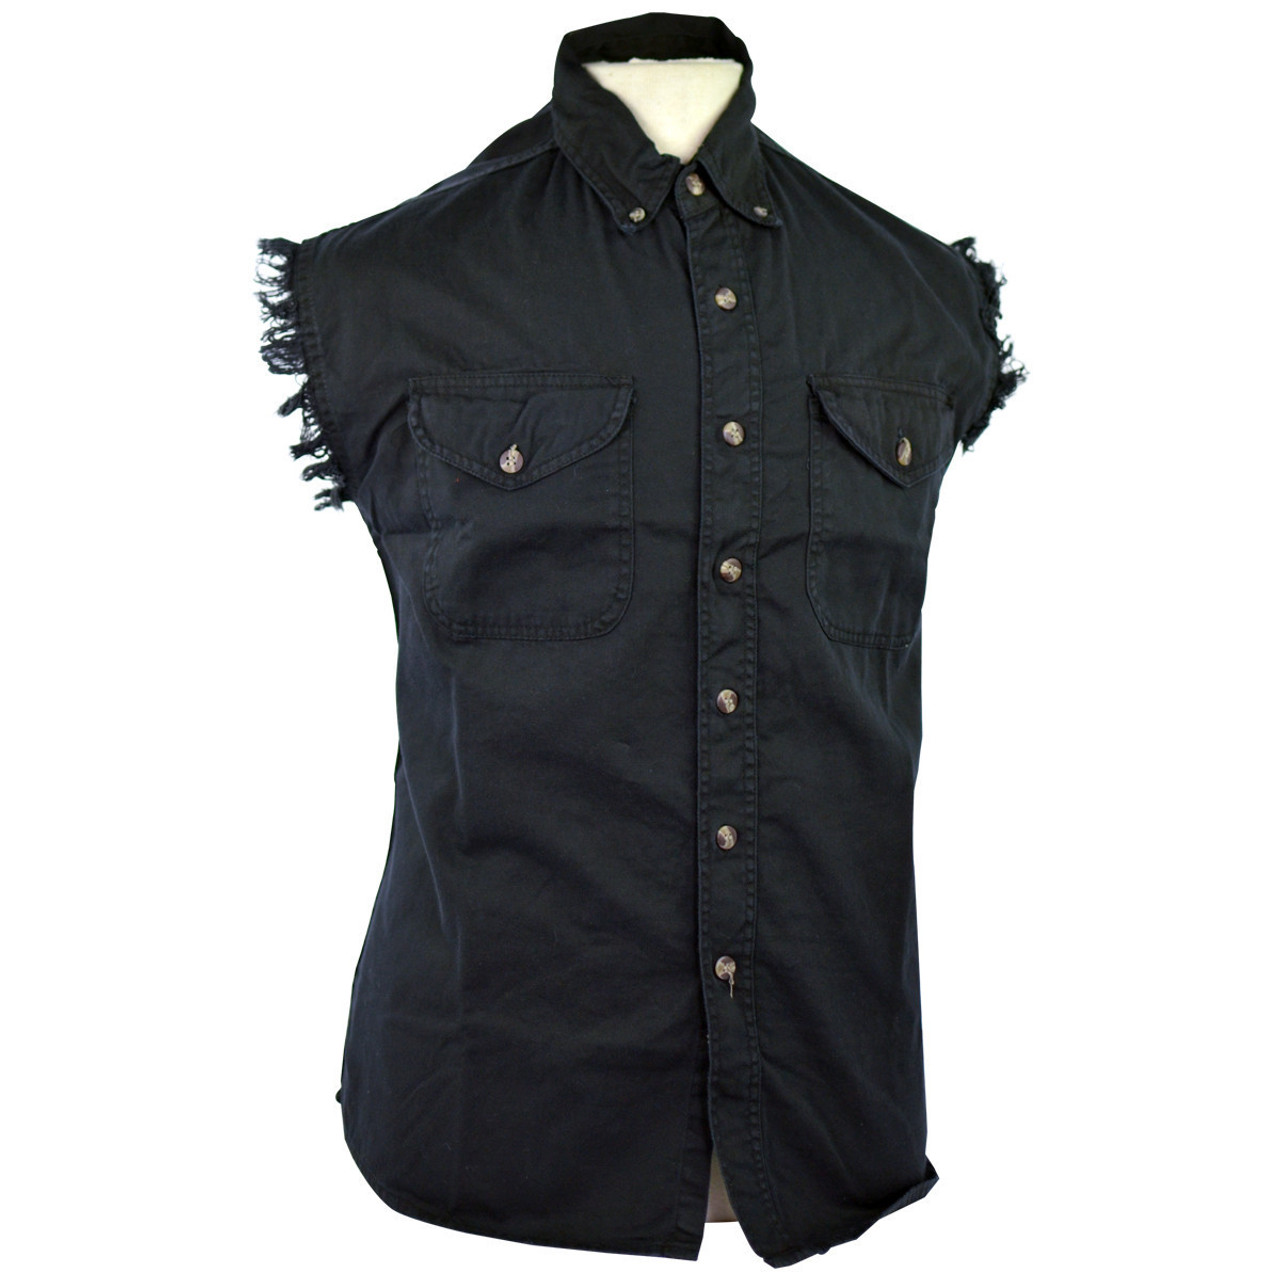 Casual Button Up Sleeveless Denim Shirt Blouses | Sleeveless denim shirts,  Casual tops for women, Shirt blouses